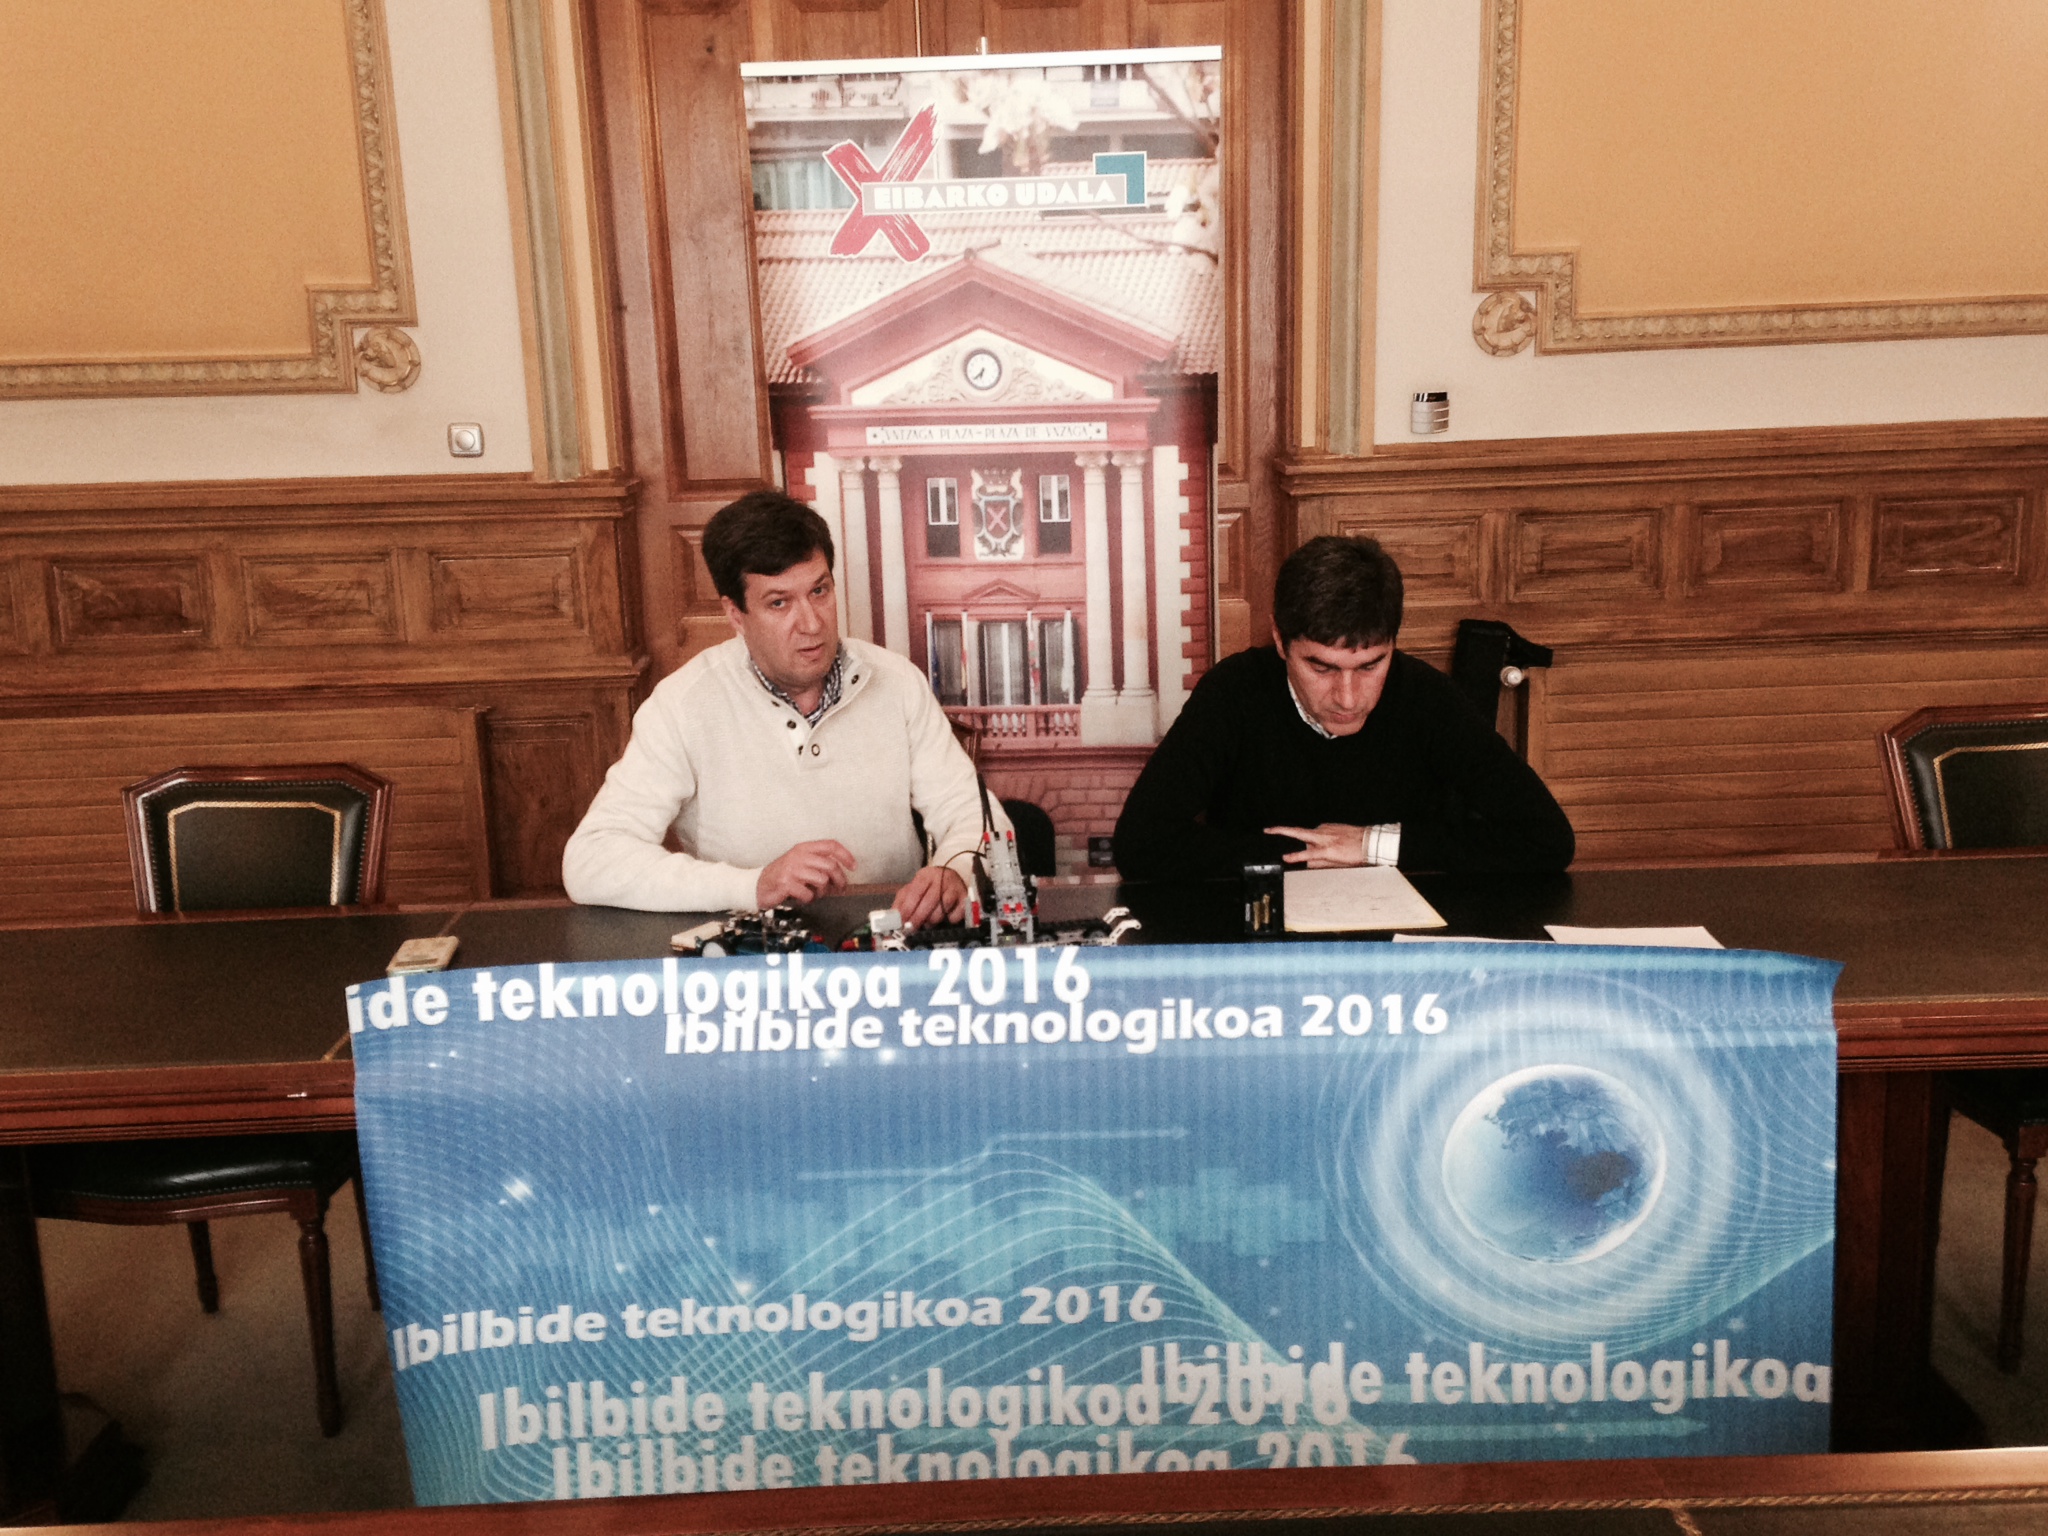 Presentados los talleres del programa "Ibilbide teknologikoa 2016"